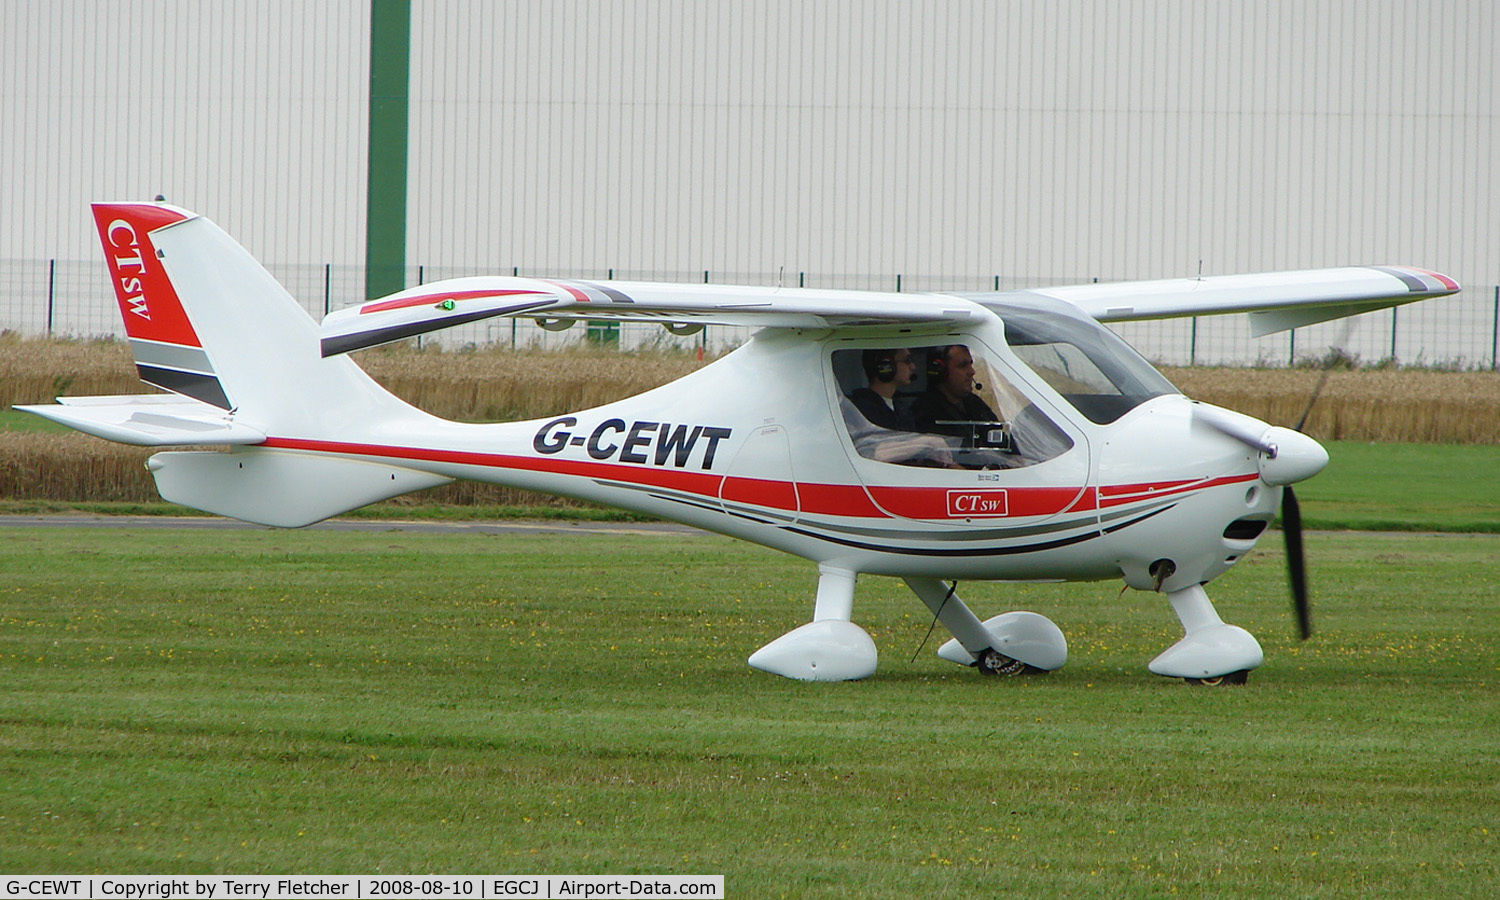 G-CEWT, Flight Design CTSW C/N 8158, Visitor to the 2008 LAA Regional Fly-in at Sherburn